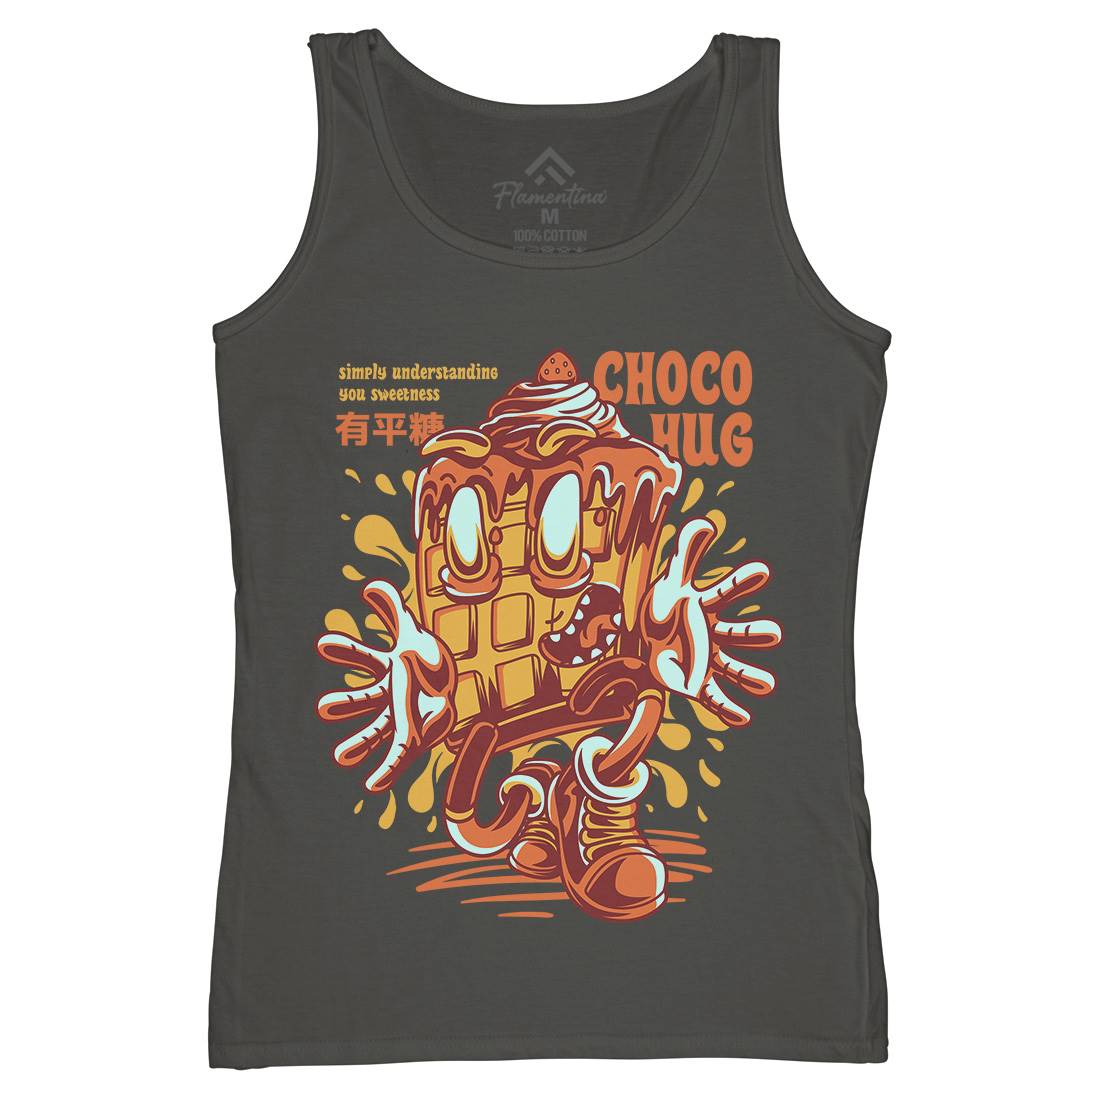 Choco Hug Womens Organic Tank Top Vest Food D725